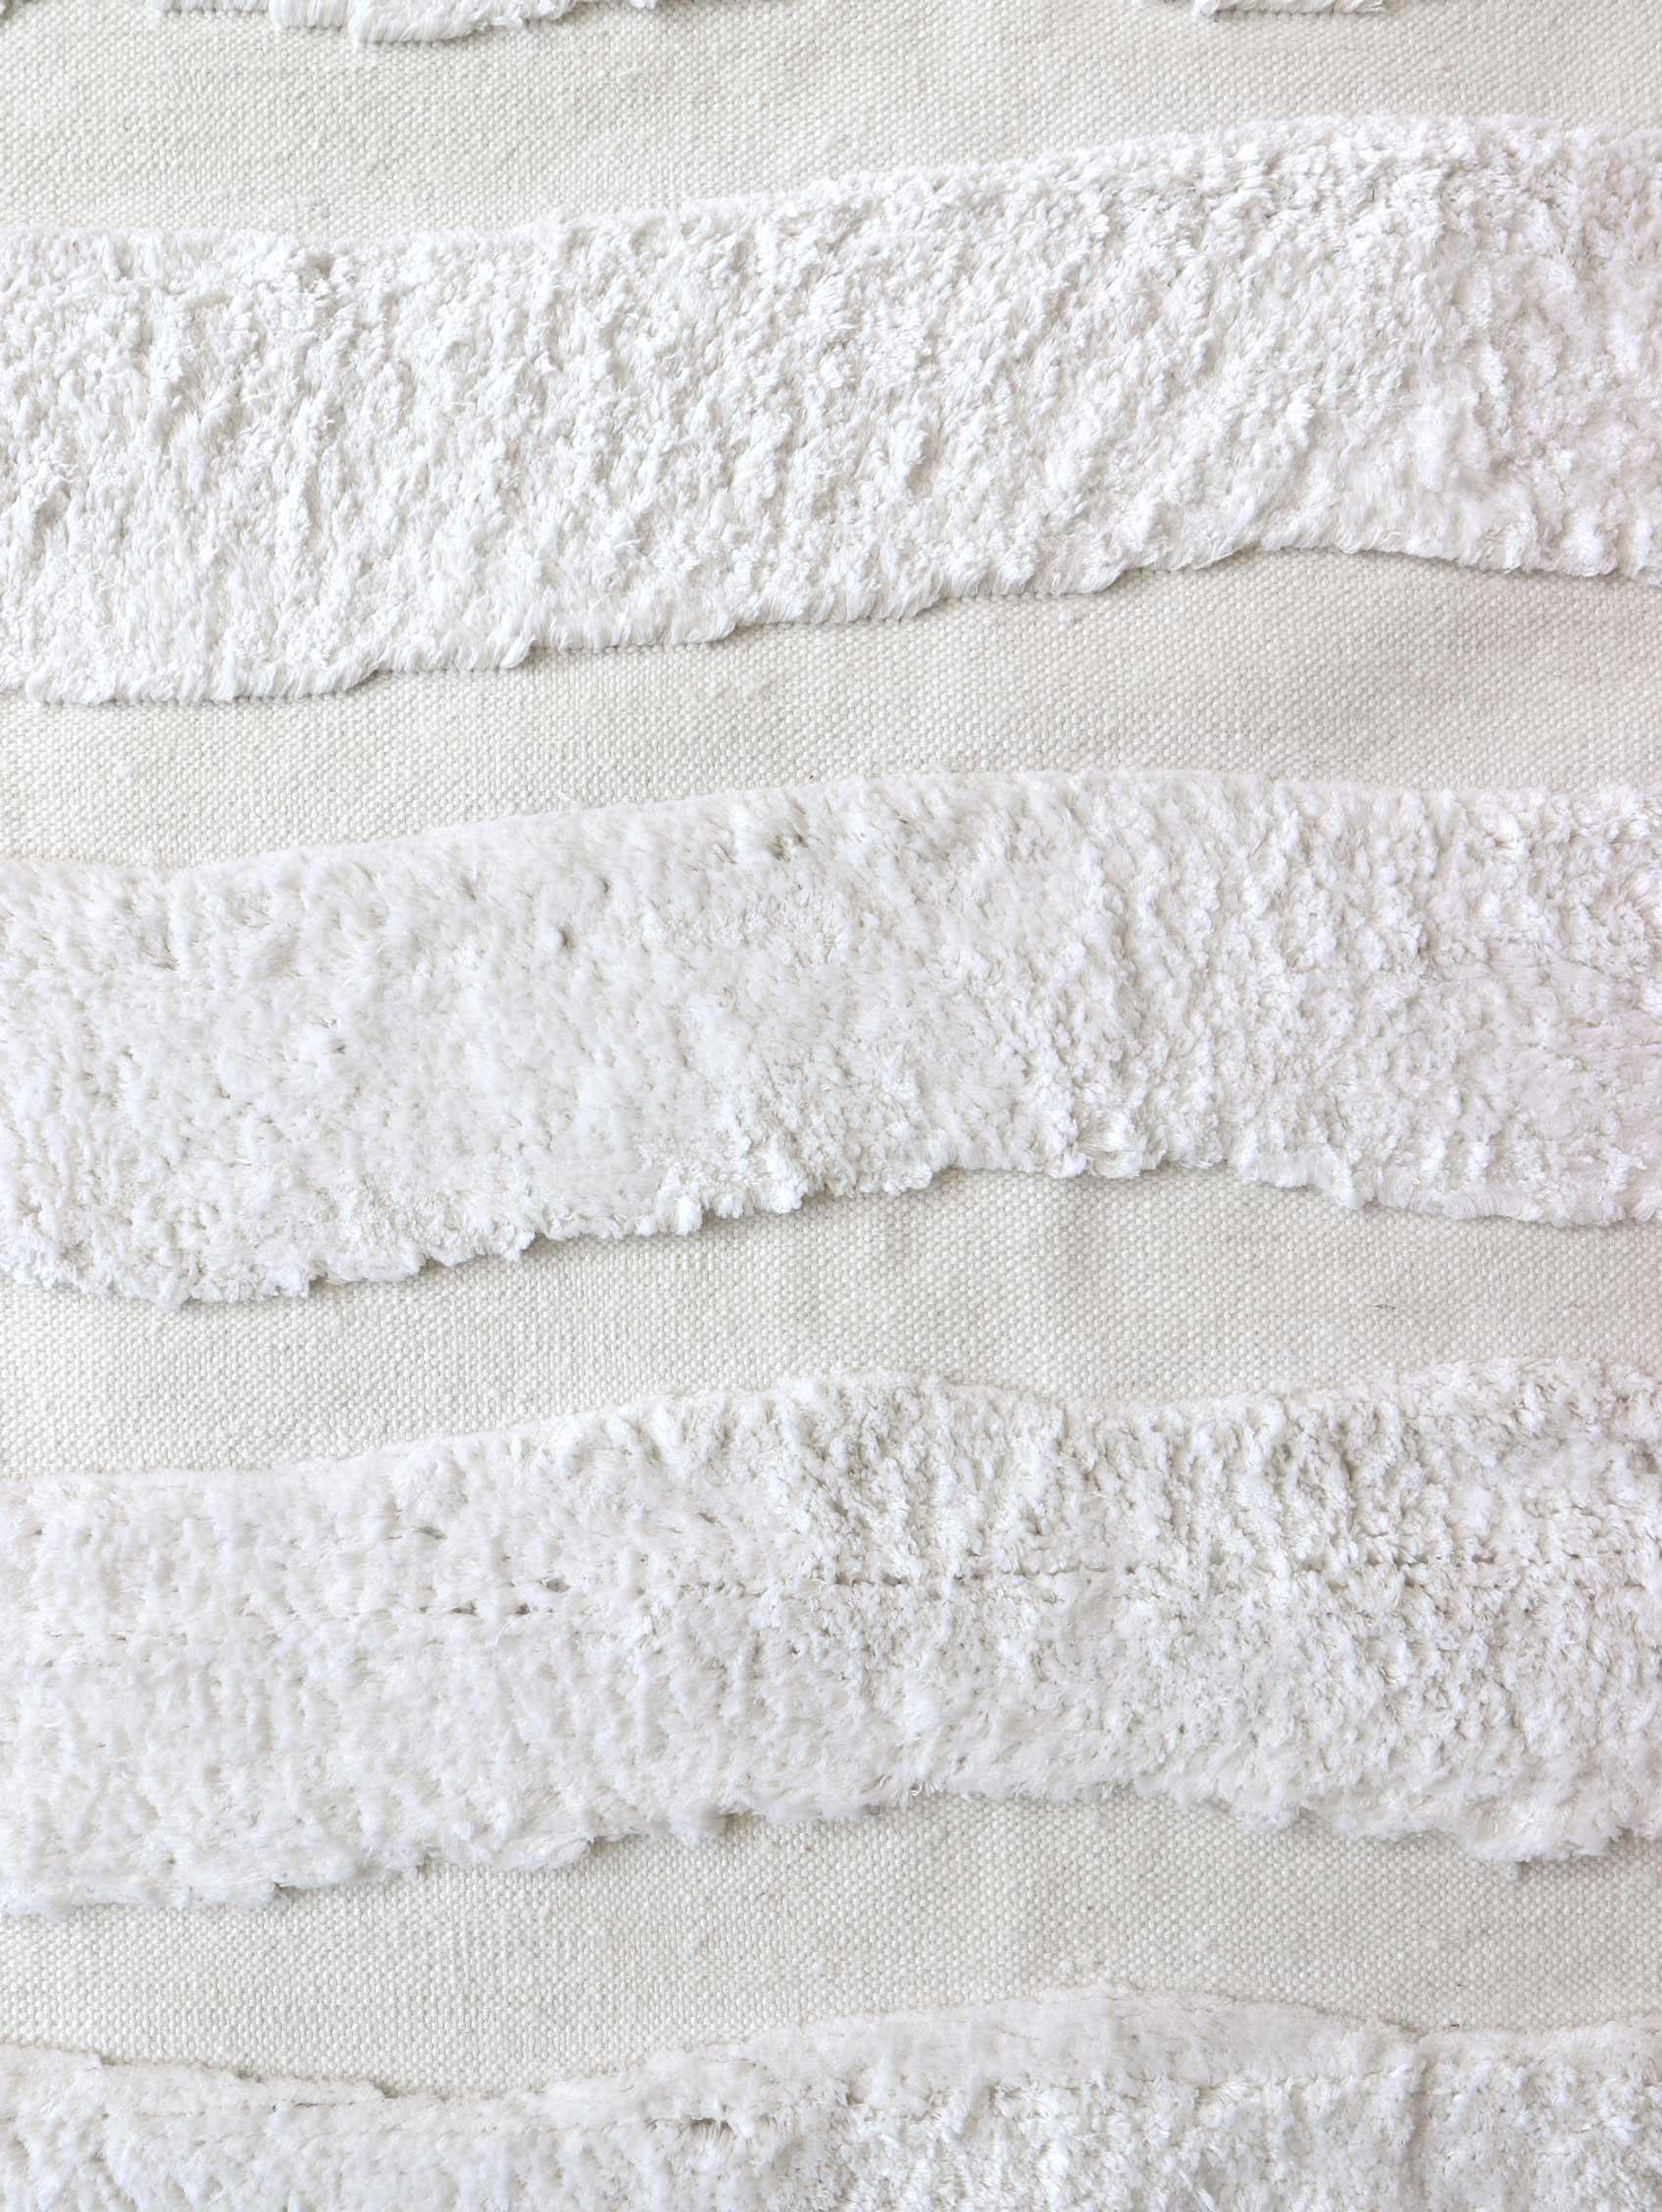 Muster des Teppichs: Bold Stripe - Lefko Weiß
MATERIAL: Merino Wool Pile/ New Zealand Wool Flat-weave
Qualität: Wolle Flachgewebe & marokkanischer Flor, 10mm Flor, handgewebt 
Größe: 6'-0